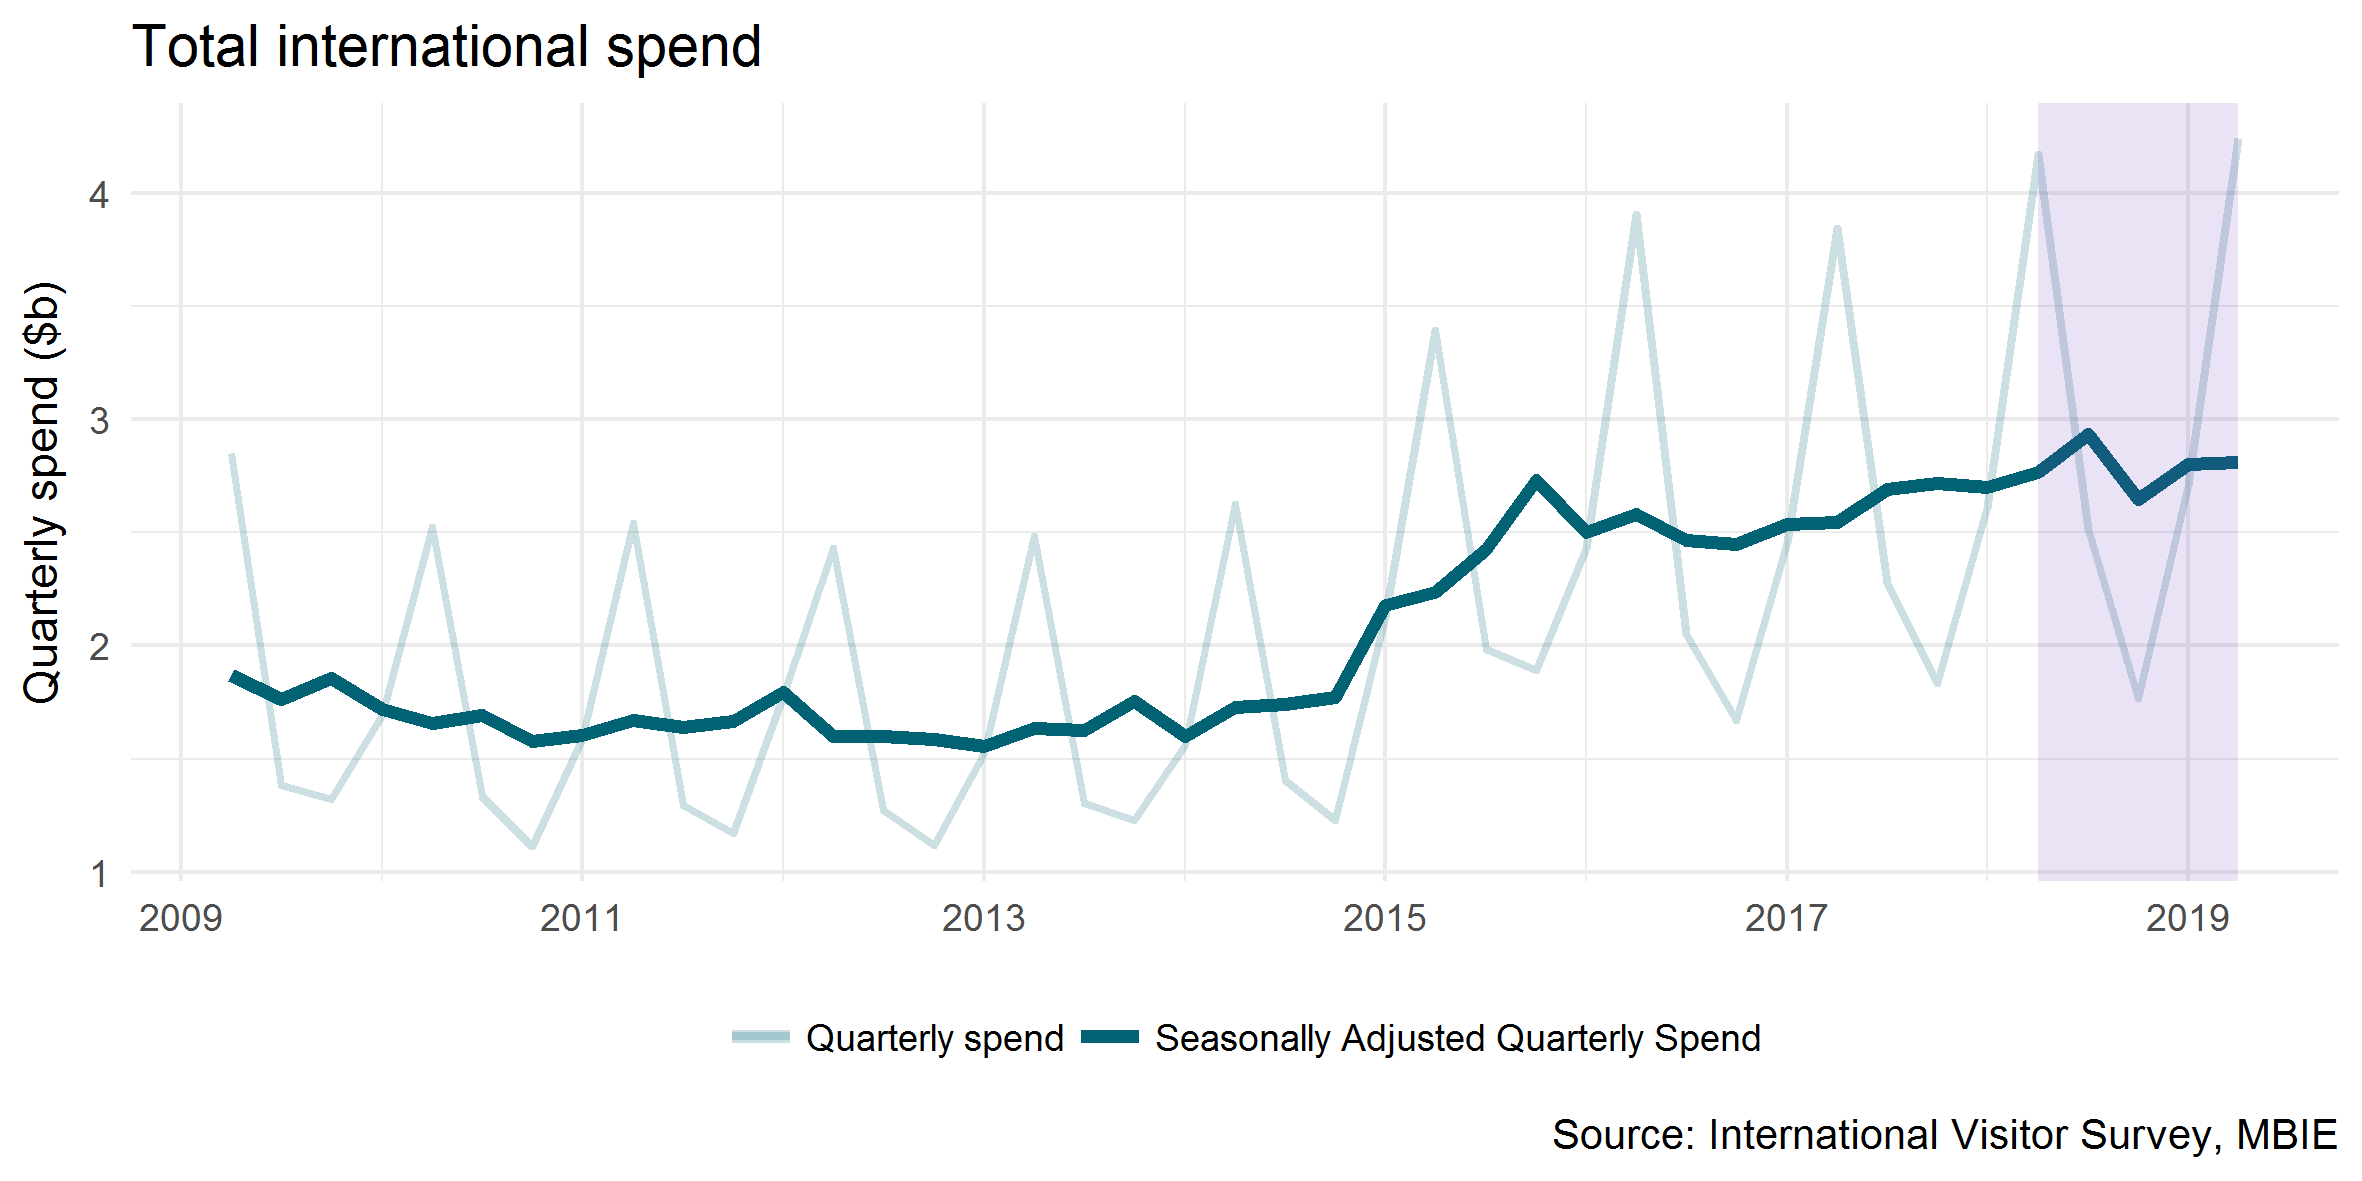 Seasonally adjusted quarterly spend